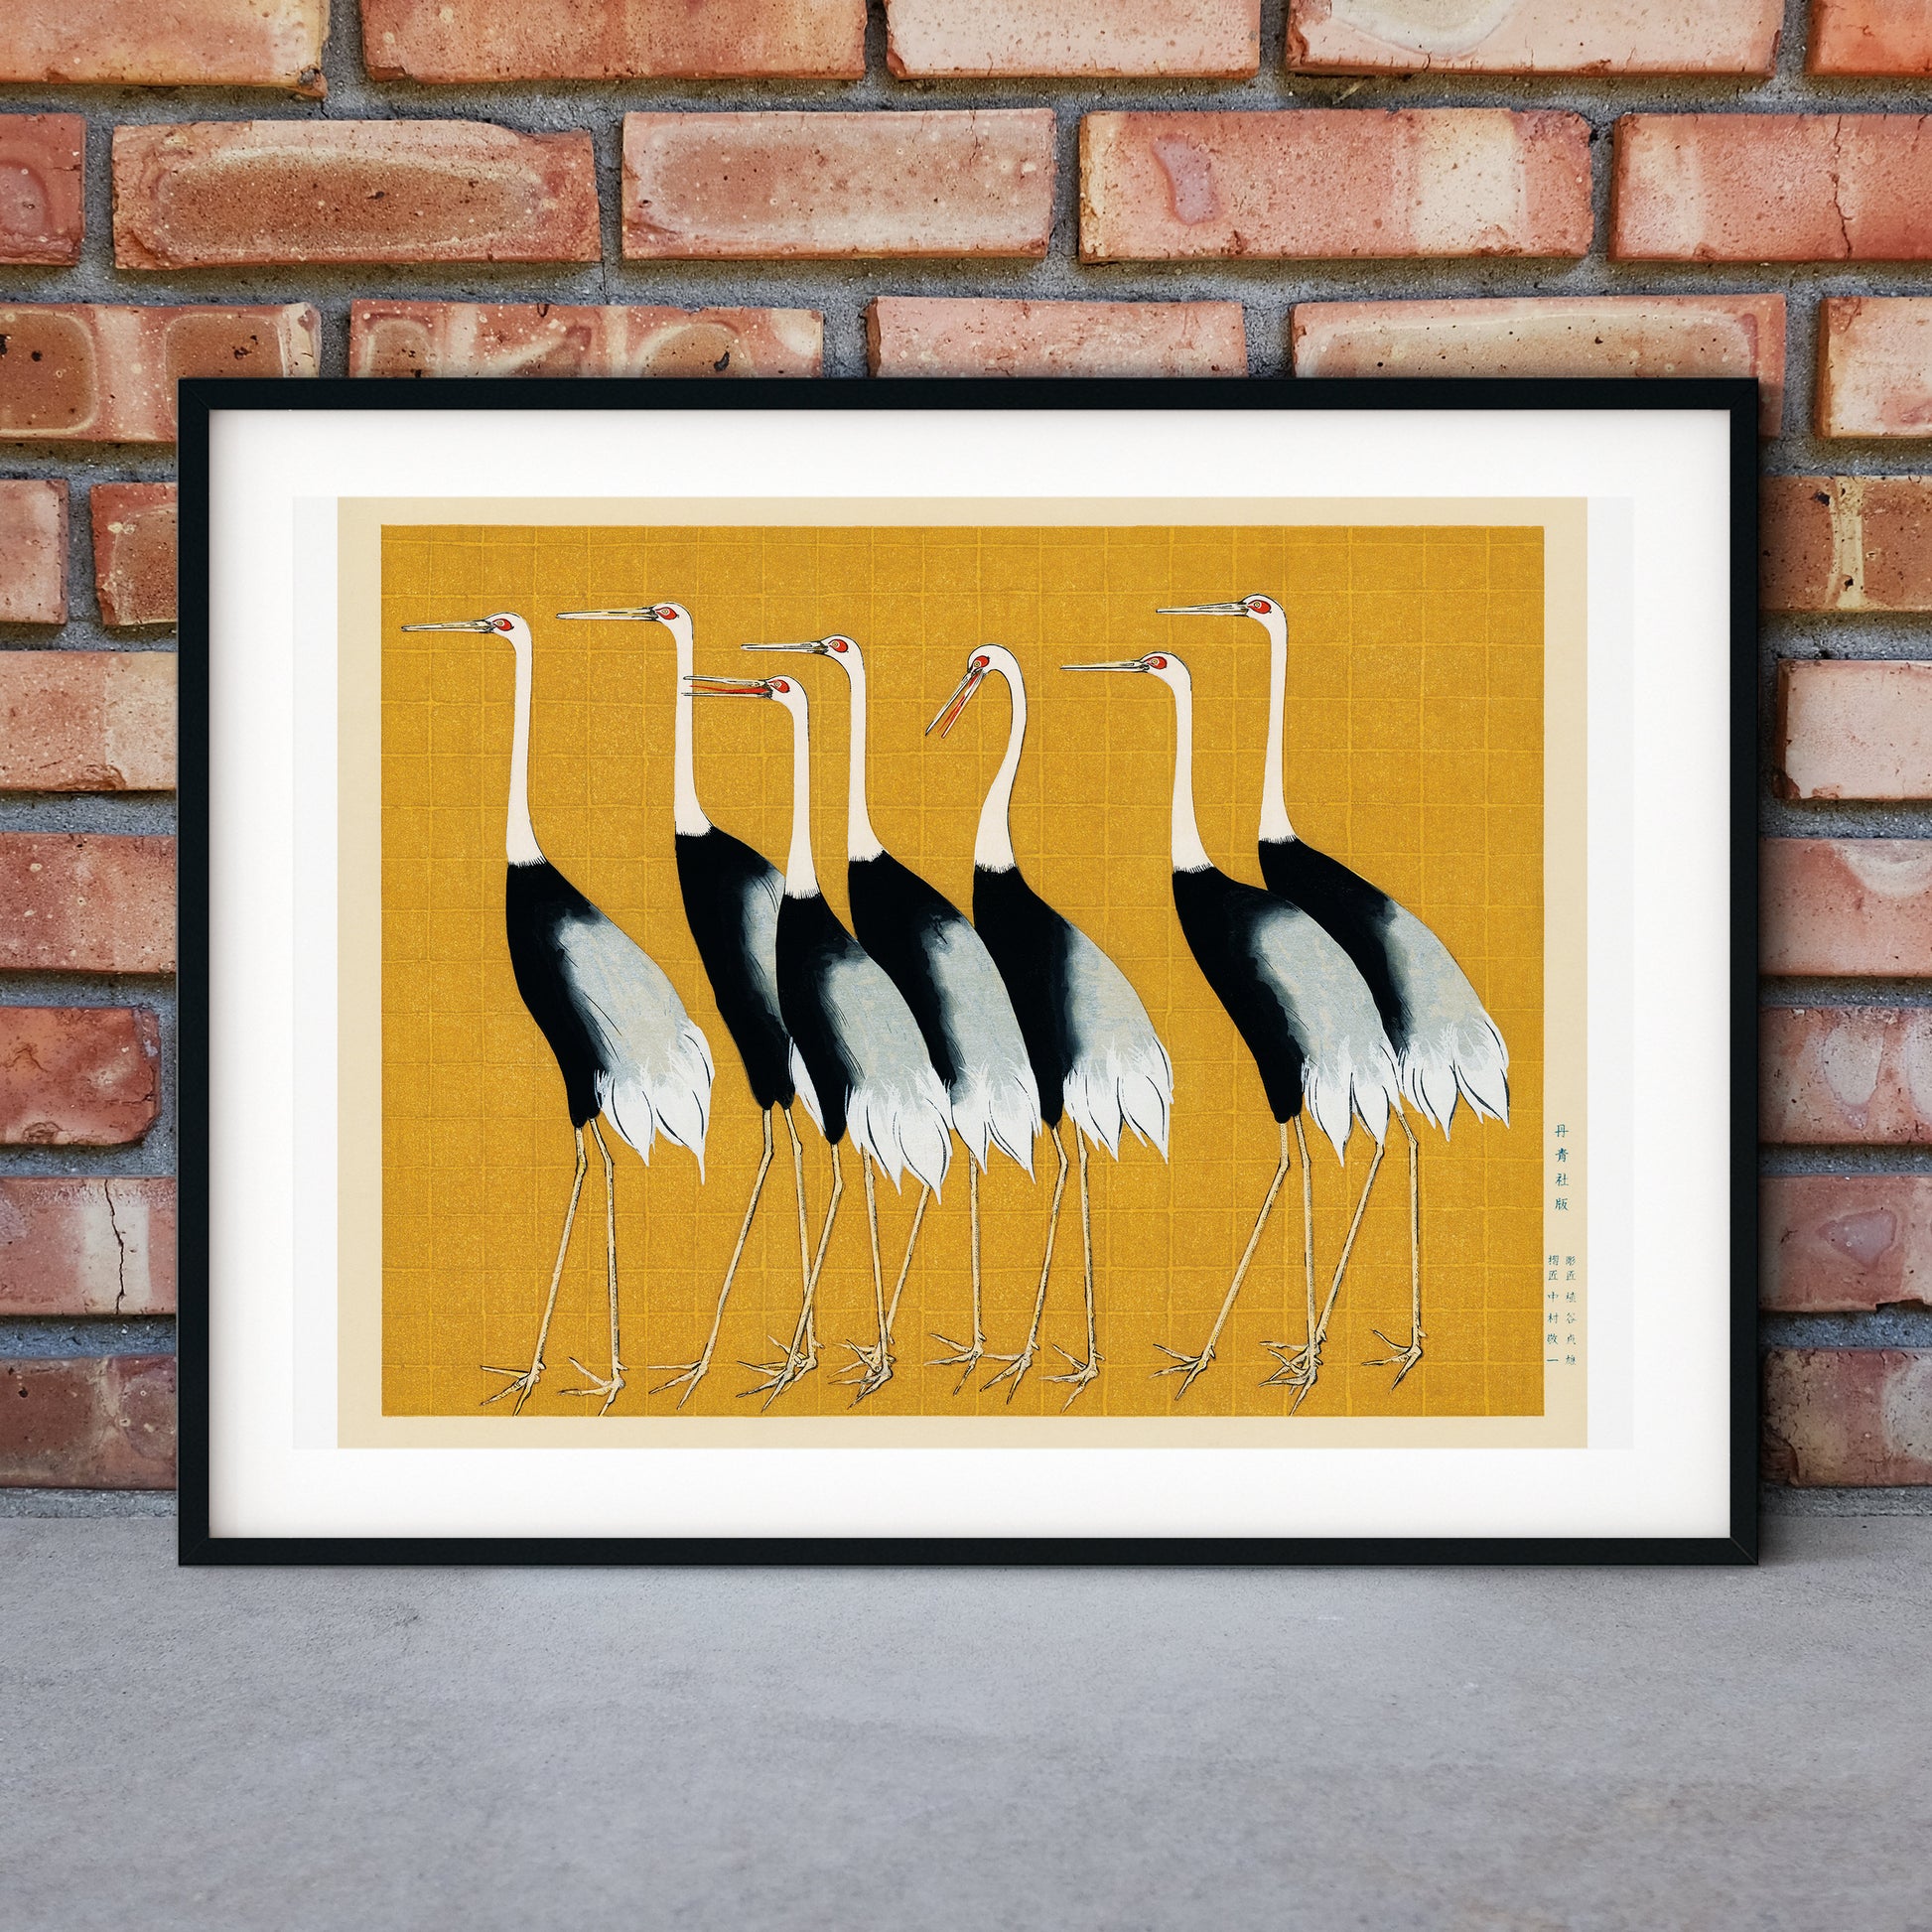 Japanese Cranes Print, Japanese Poster Flock of 7 Cranes by Korin